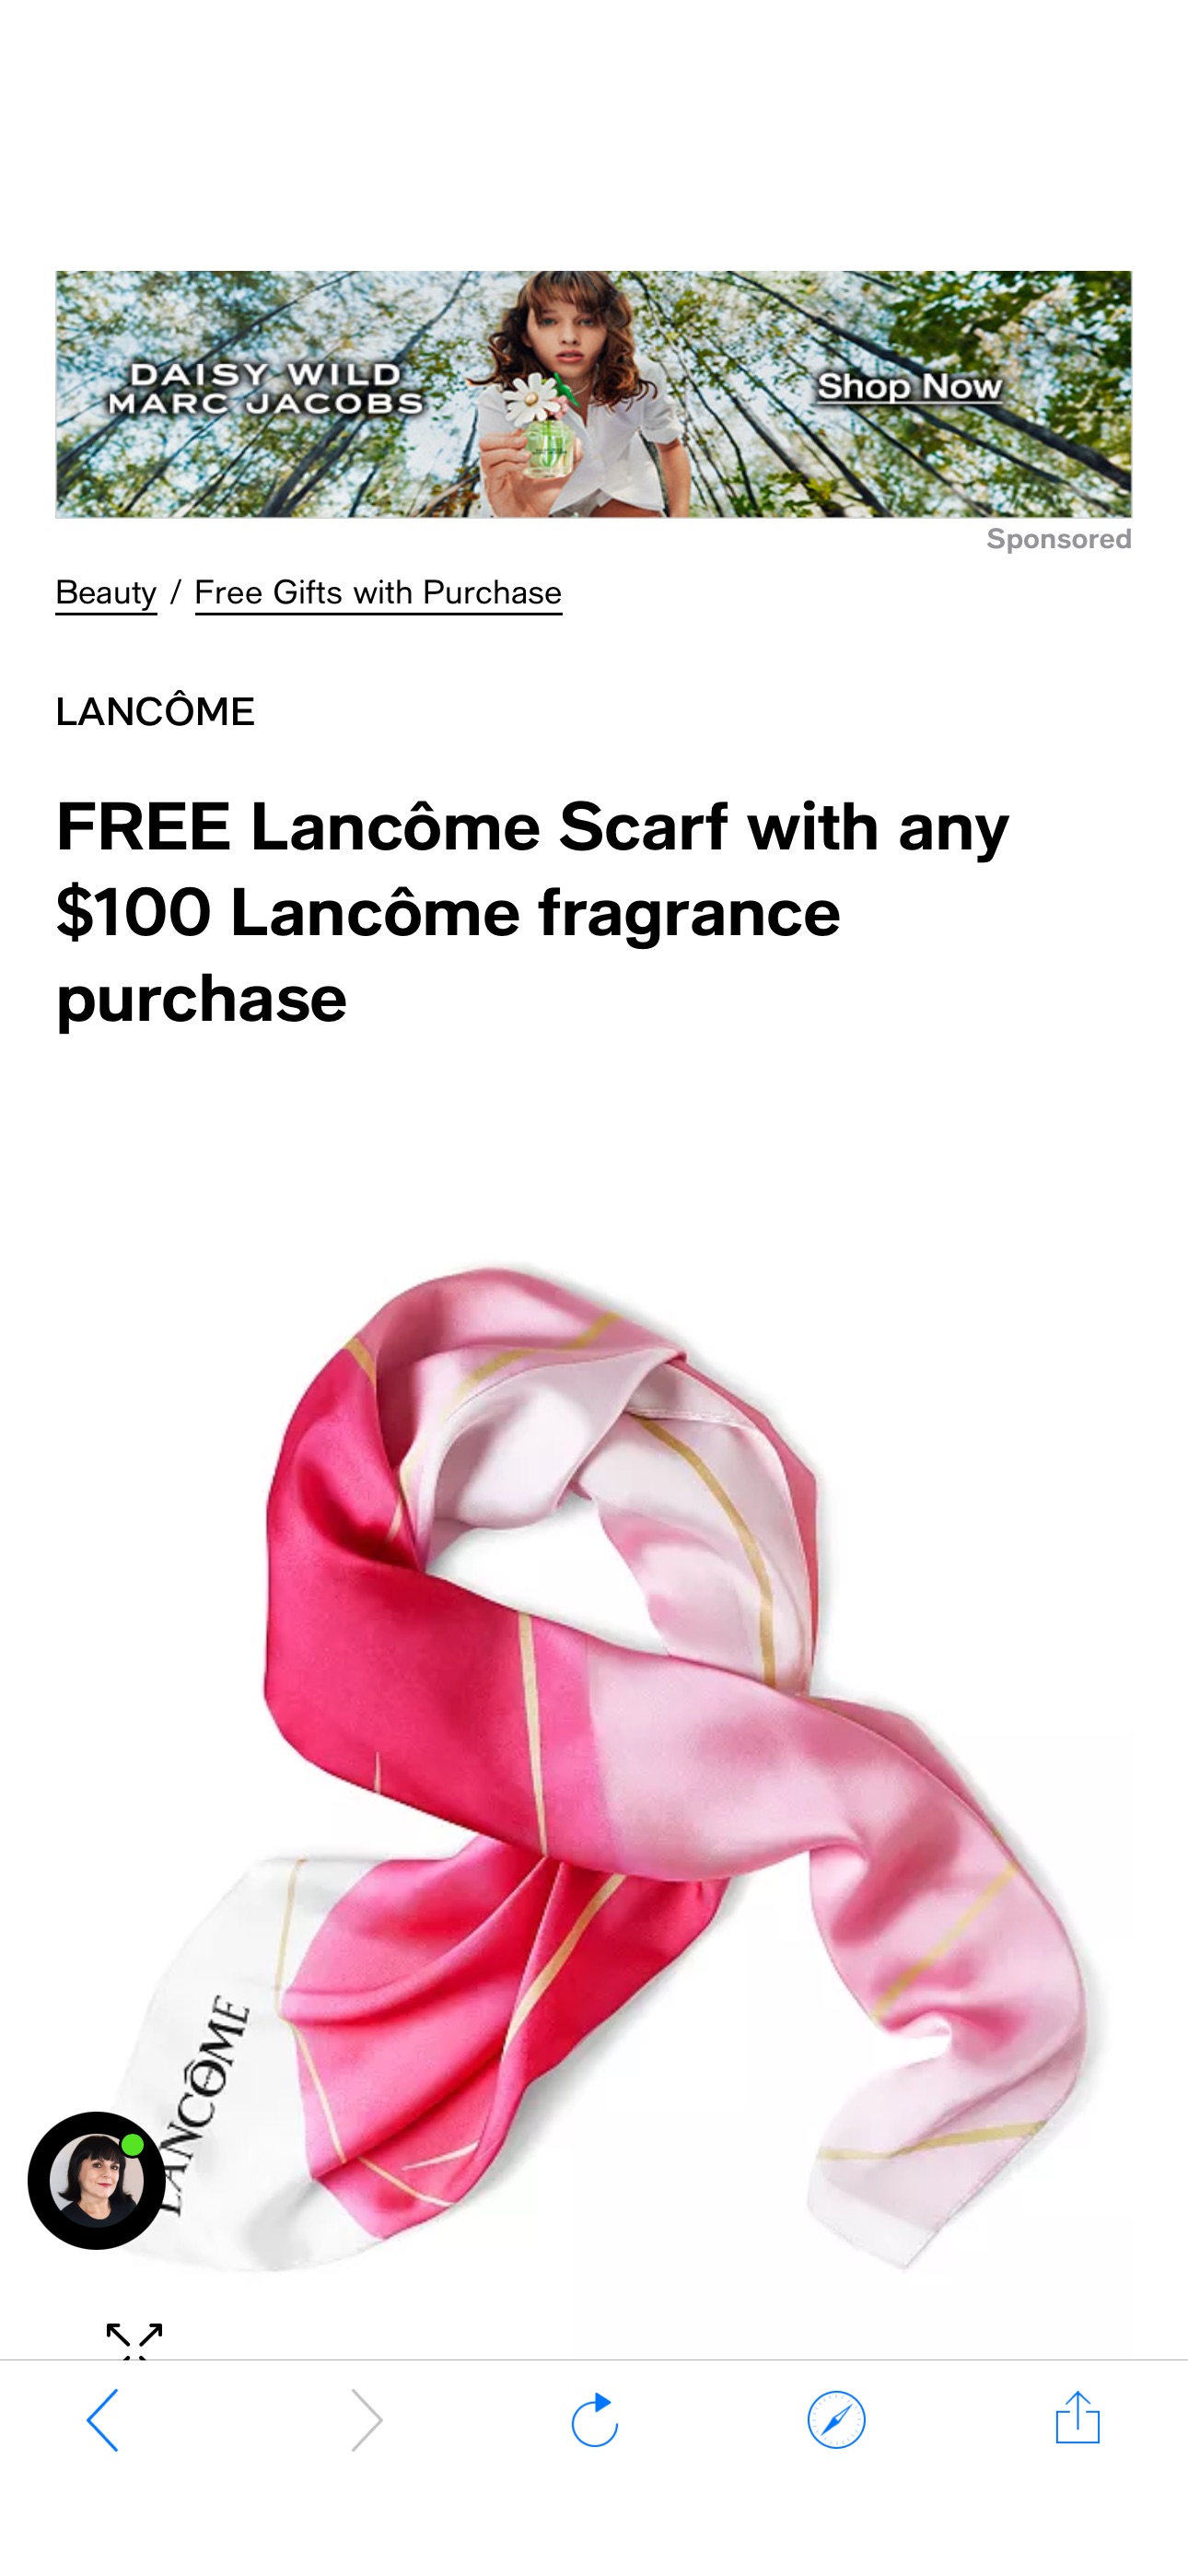 Lancôme FREE Lancôme Scarf with any $100 Lancôme fragrance purchase - Macy's满额送丝巾